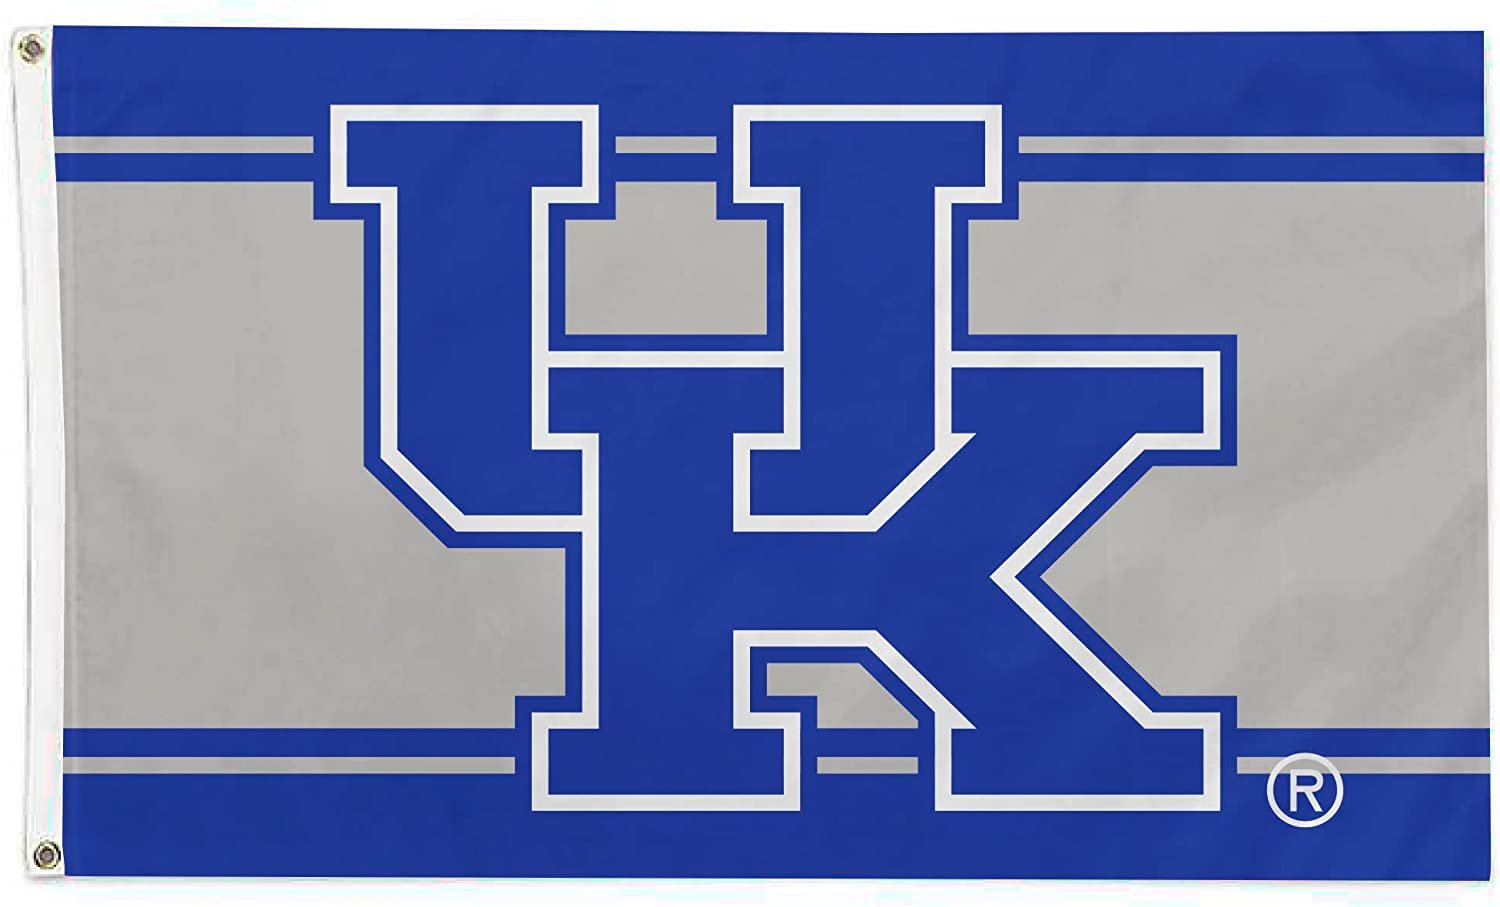 University of Kentucky Wildcats Flag Banner 3x5 Feet Metal Grommets Standard Design